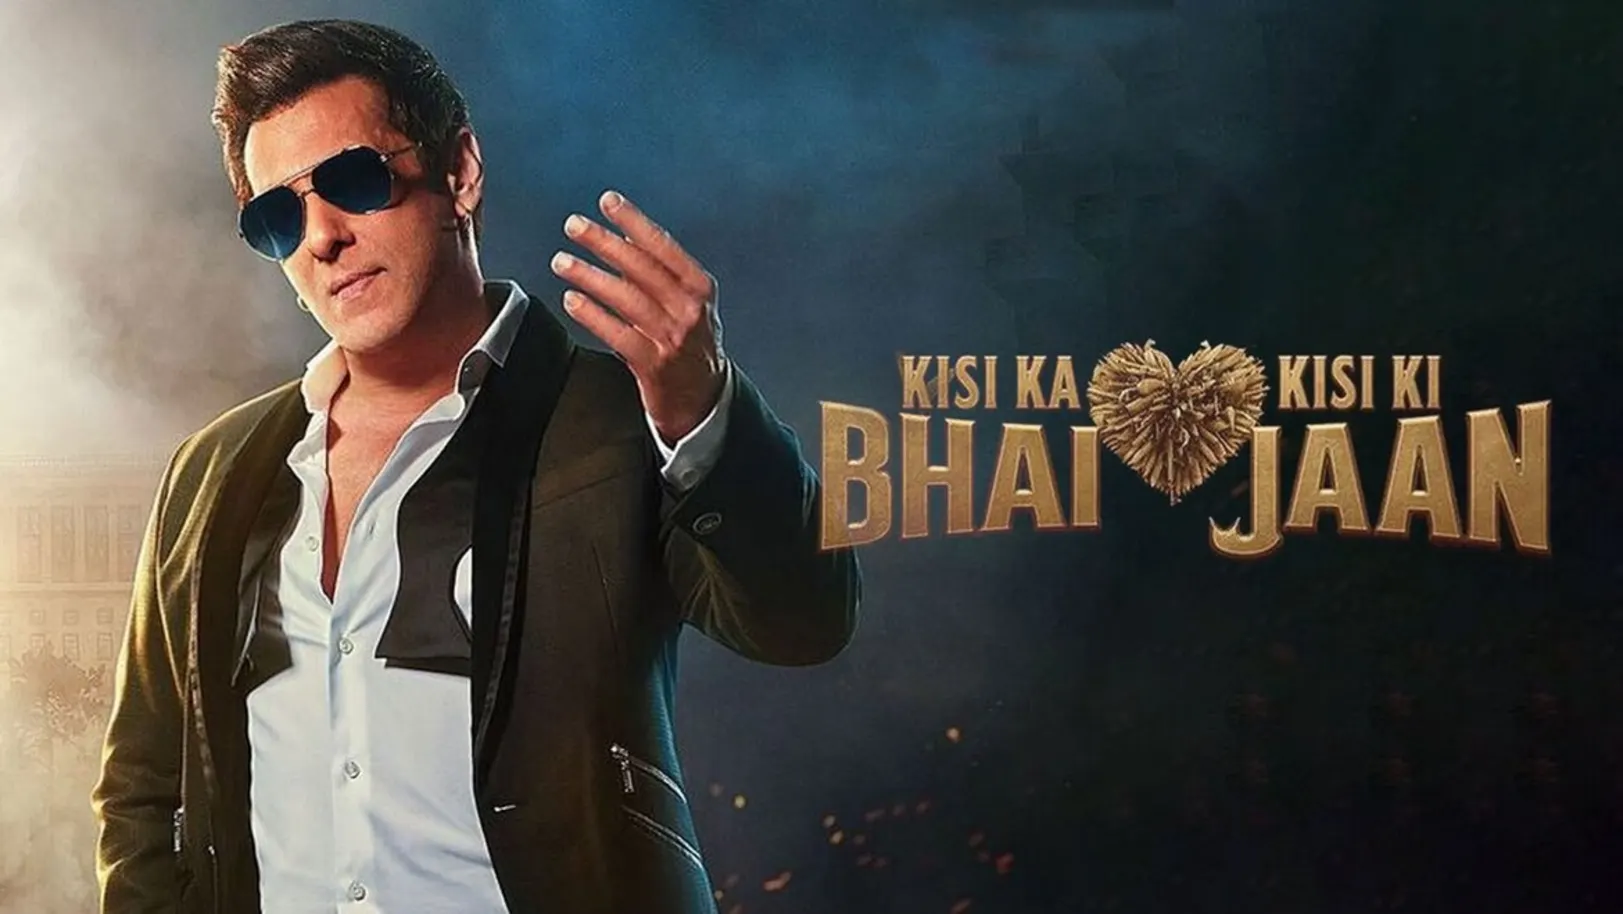 Kisi Ka Bhai Kisi Ki Jaan Streaming Now On Zee Cinema HD